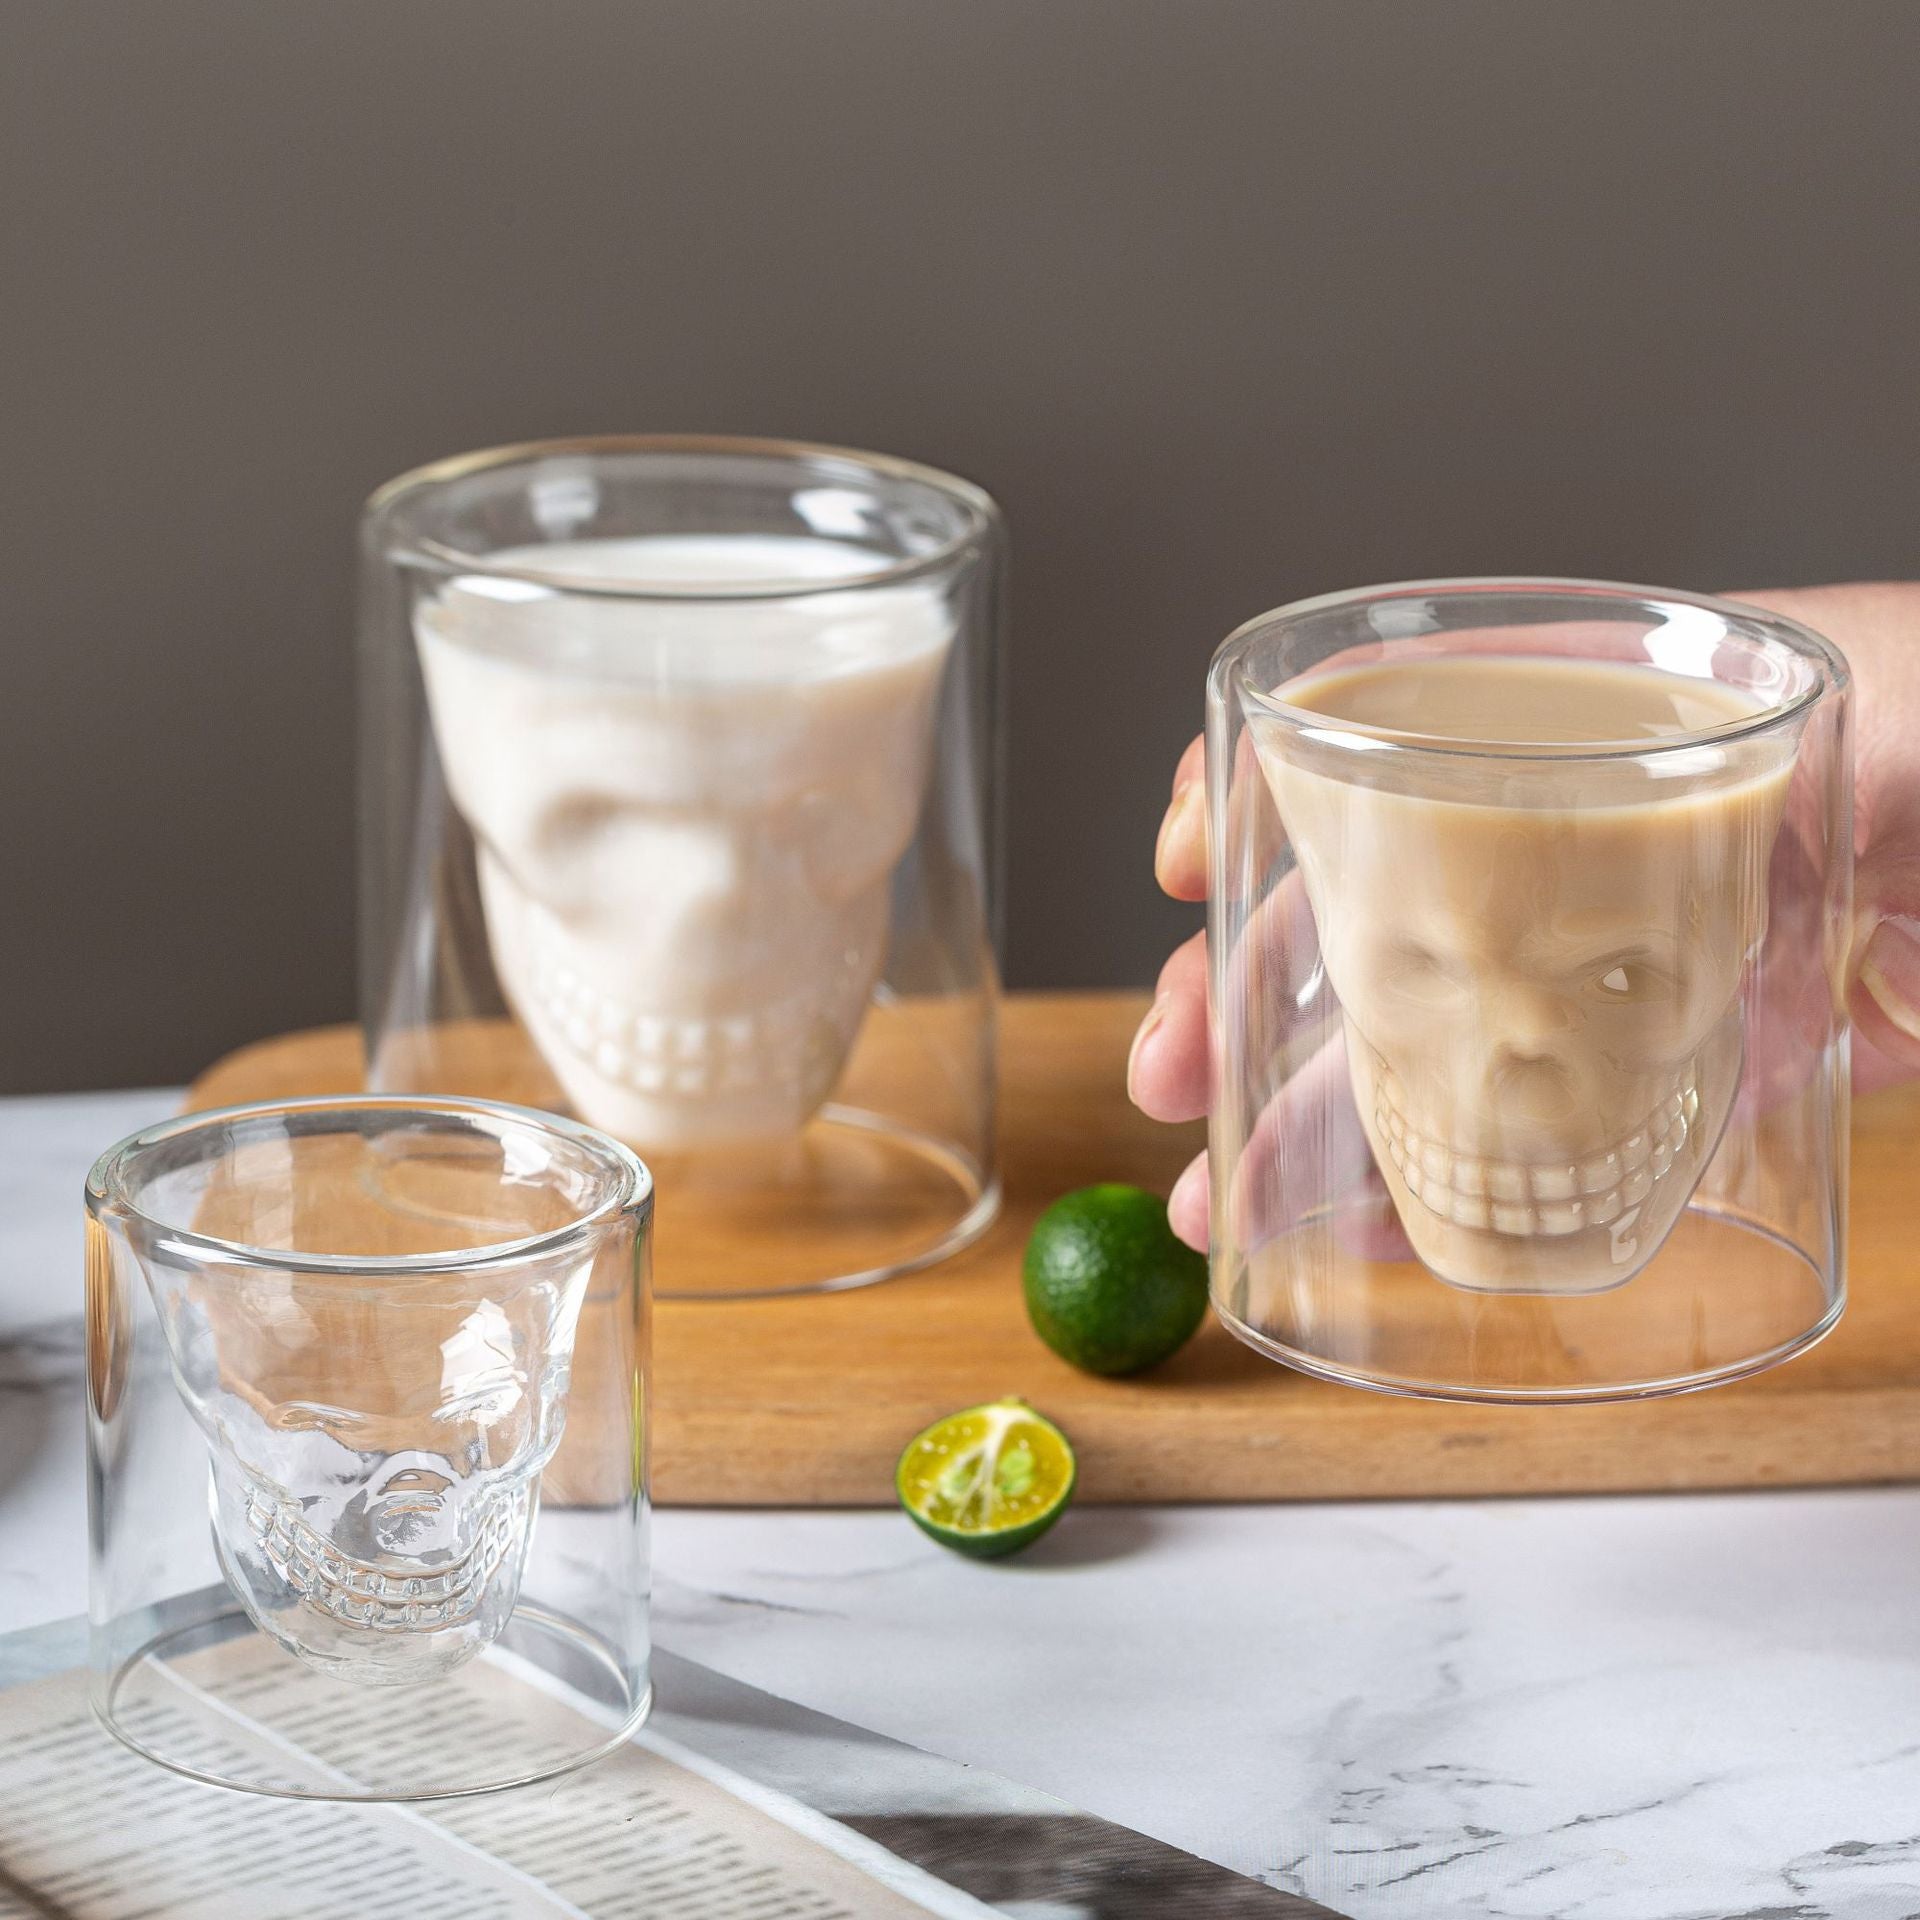 Artistic Personalized Skull Wine Cup - Retro American Coffee Cup, Mini Heat-Resistant Borosilicate Glass Cup, Creative Latte Cup